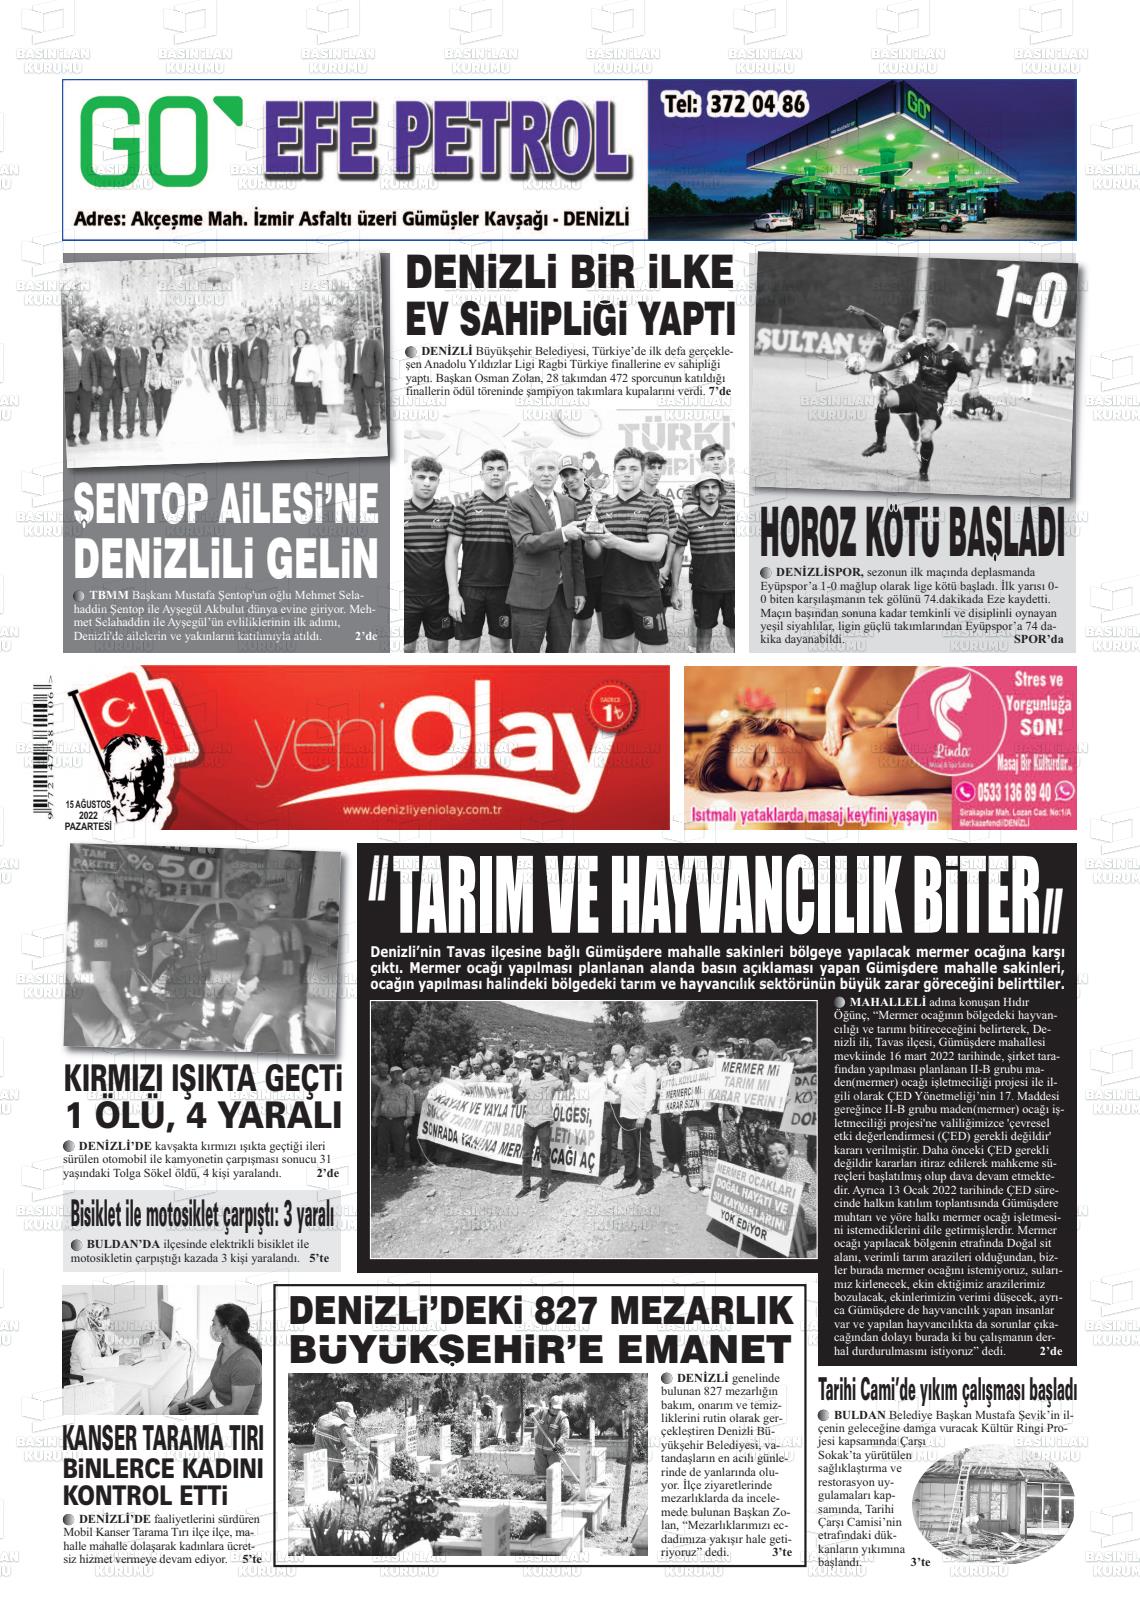 15 Ağustos 2022 Denizli Yeni Olay Gazete Manşeti